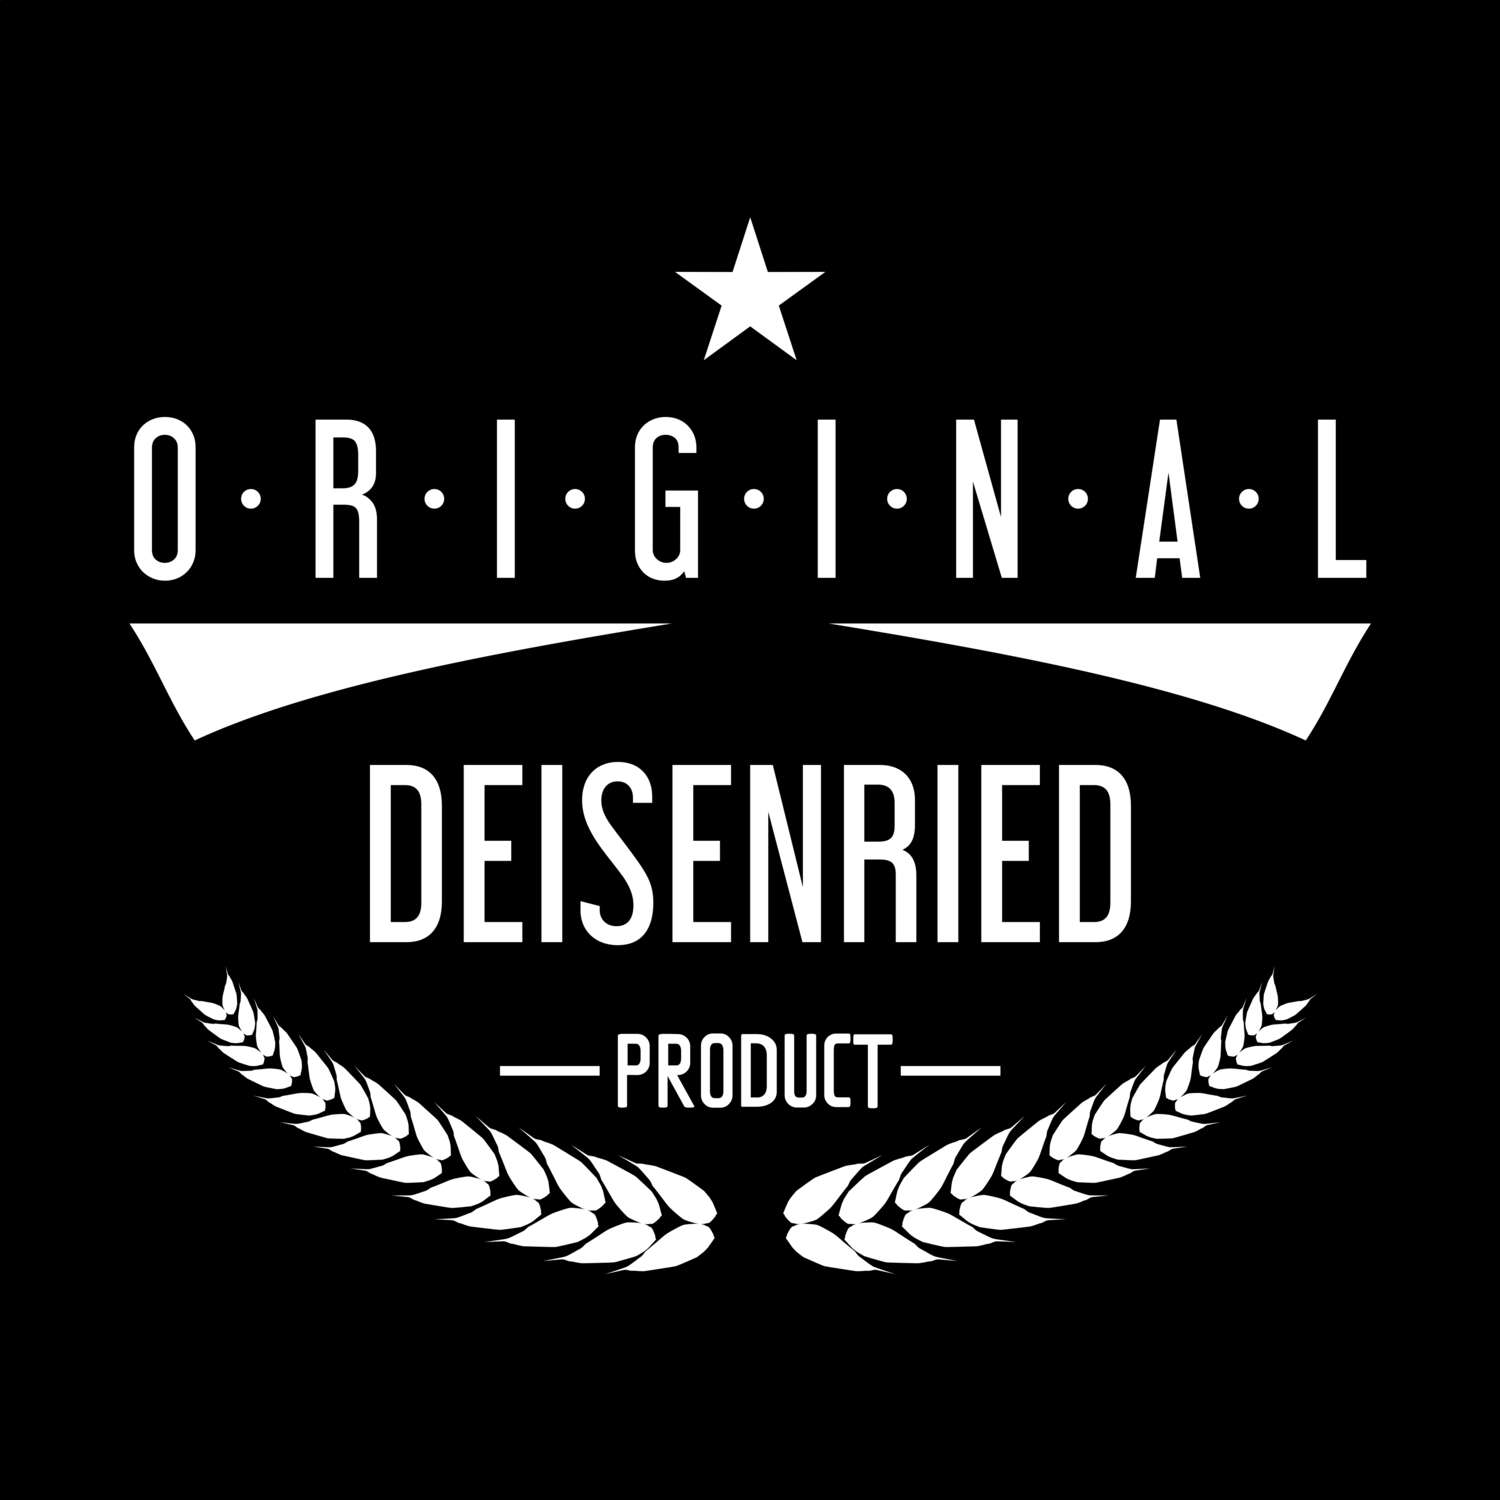 Deisenried T-Shirt »Original Product«